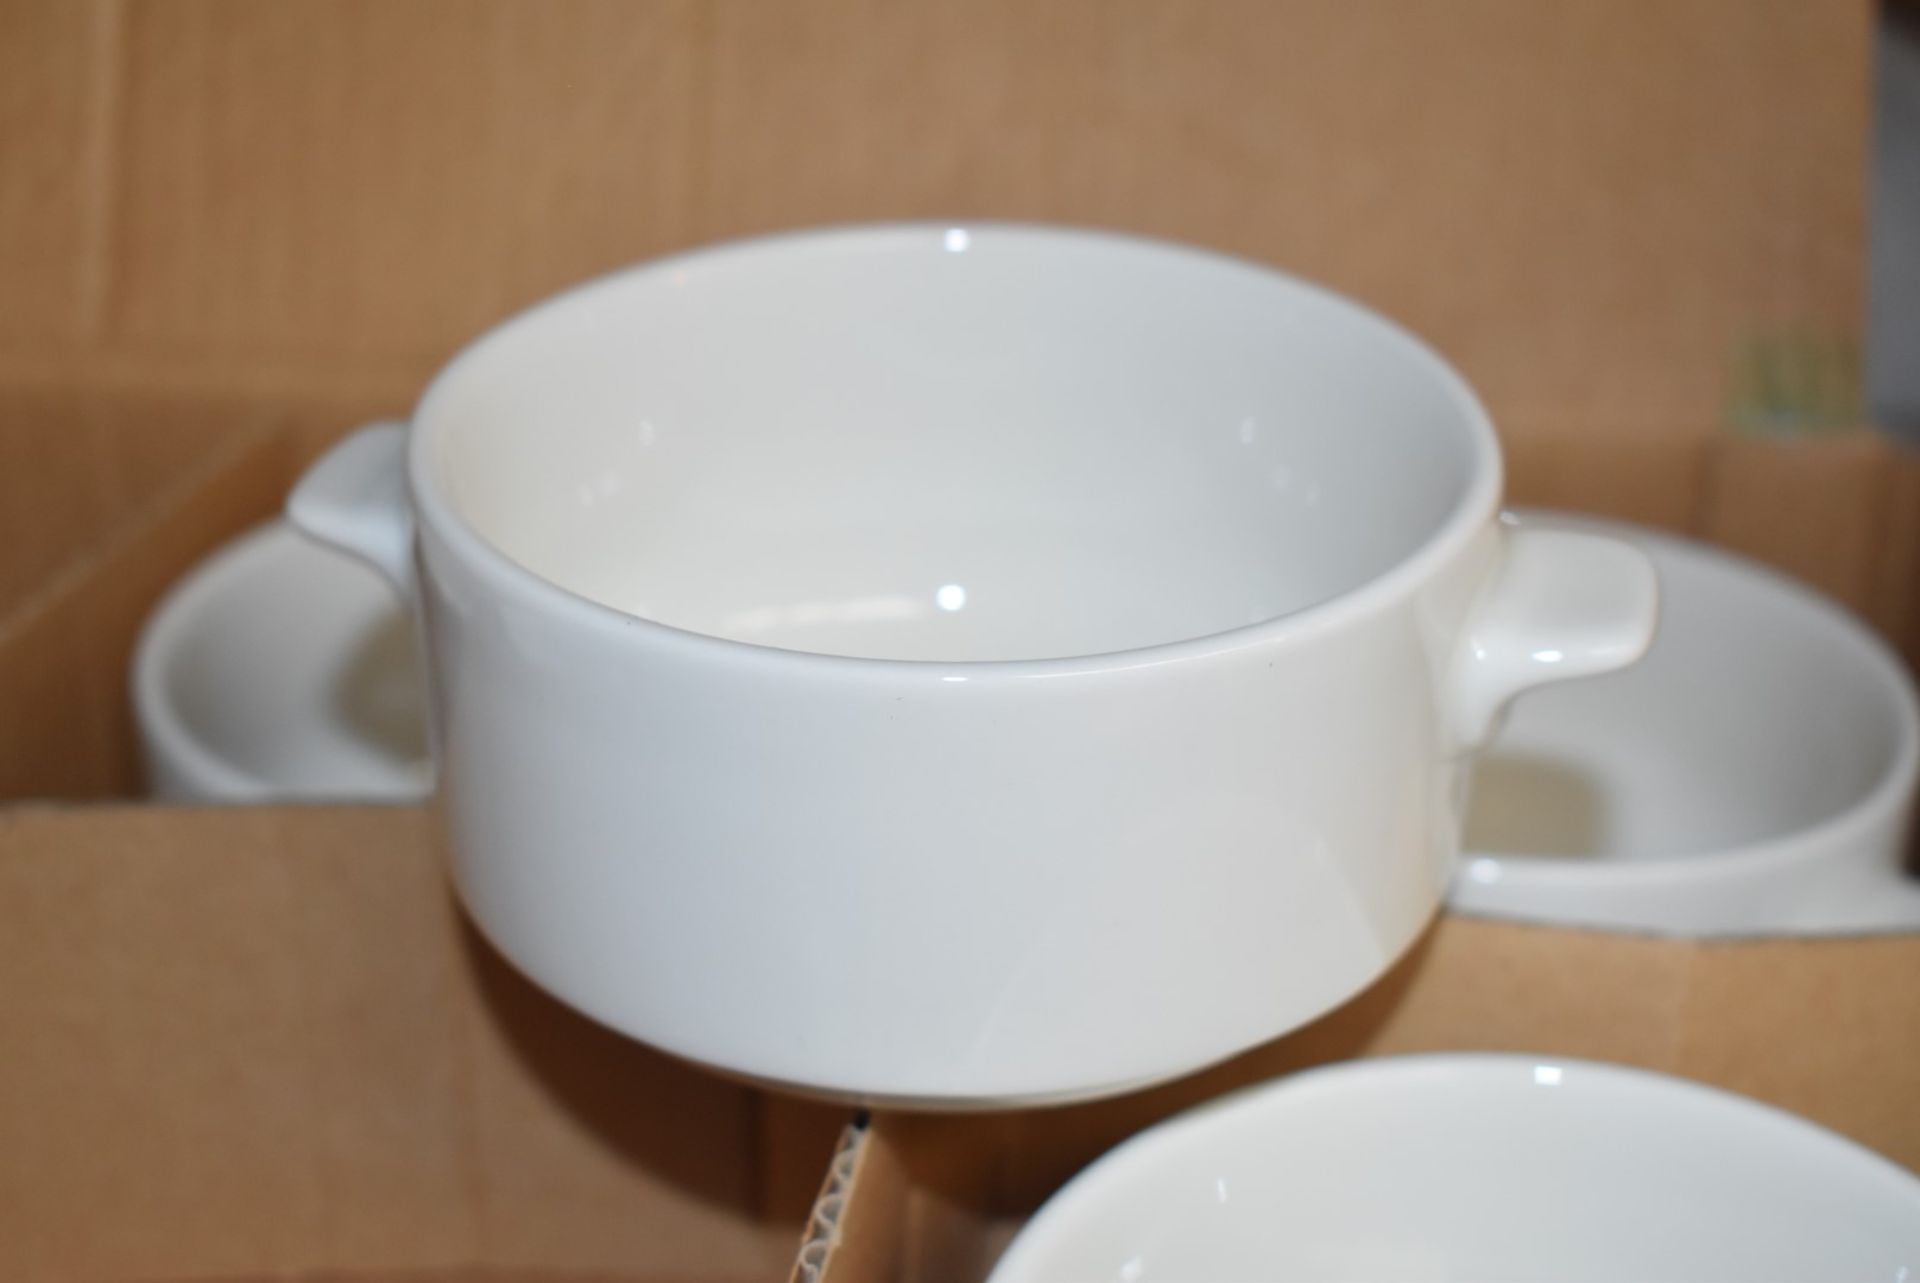 12 x RAK Porcelain Banquet 30cl Ivory Porcelain Lugged Soup Bowls With Handles - Type: BACS02 - - Image 3 of 6